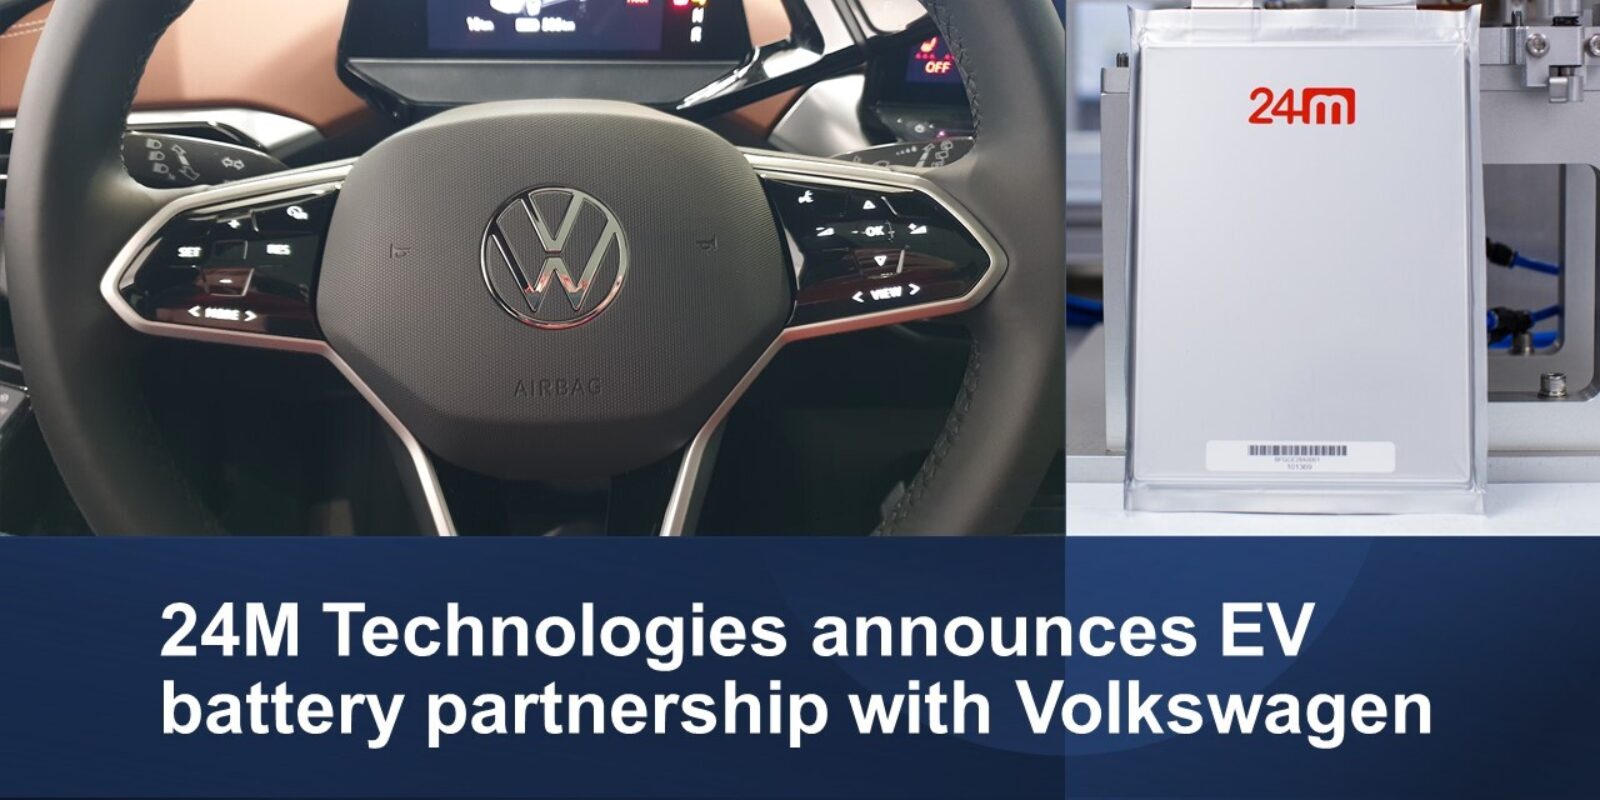 24 M Technologies announces EV battery partnership with Volkswagen